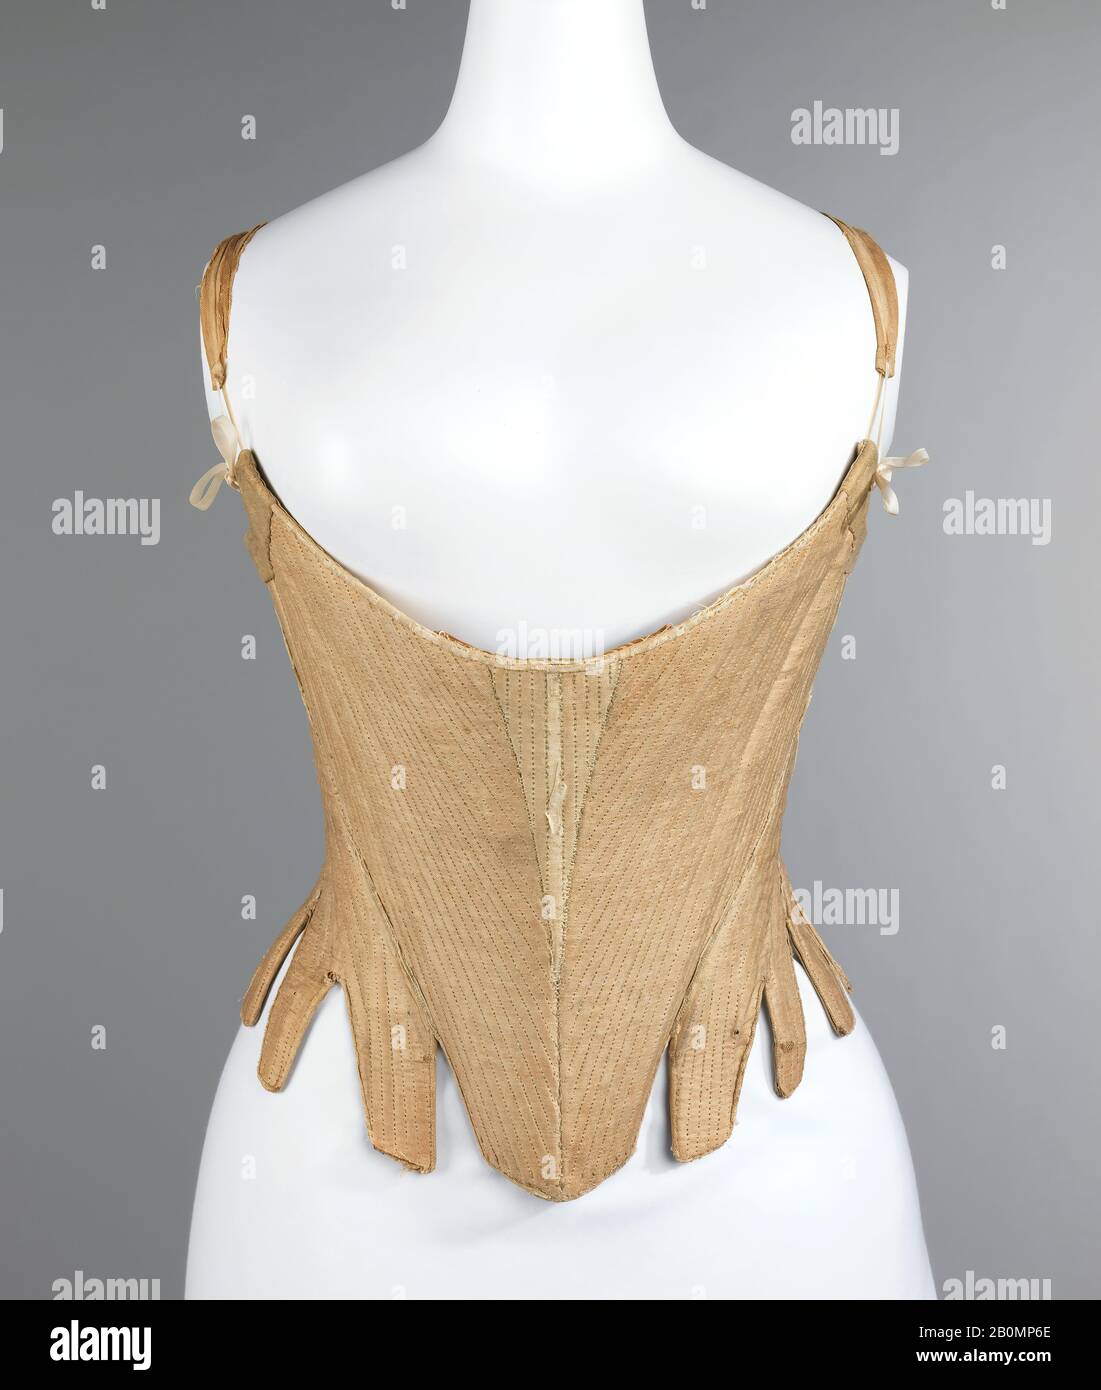 https://c8.alamy.com/comp/2B0MP6E/corset-american-174060-american-linen-leather-whalebone-2B0MP6E.jpg